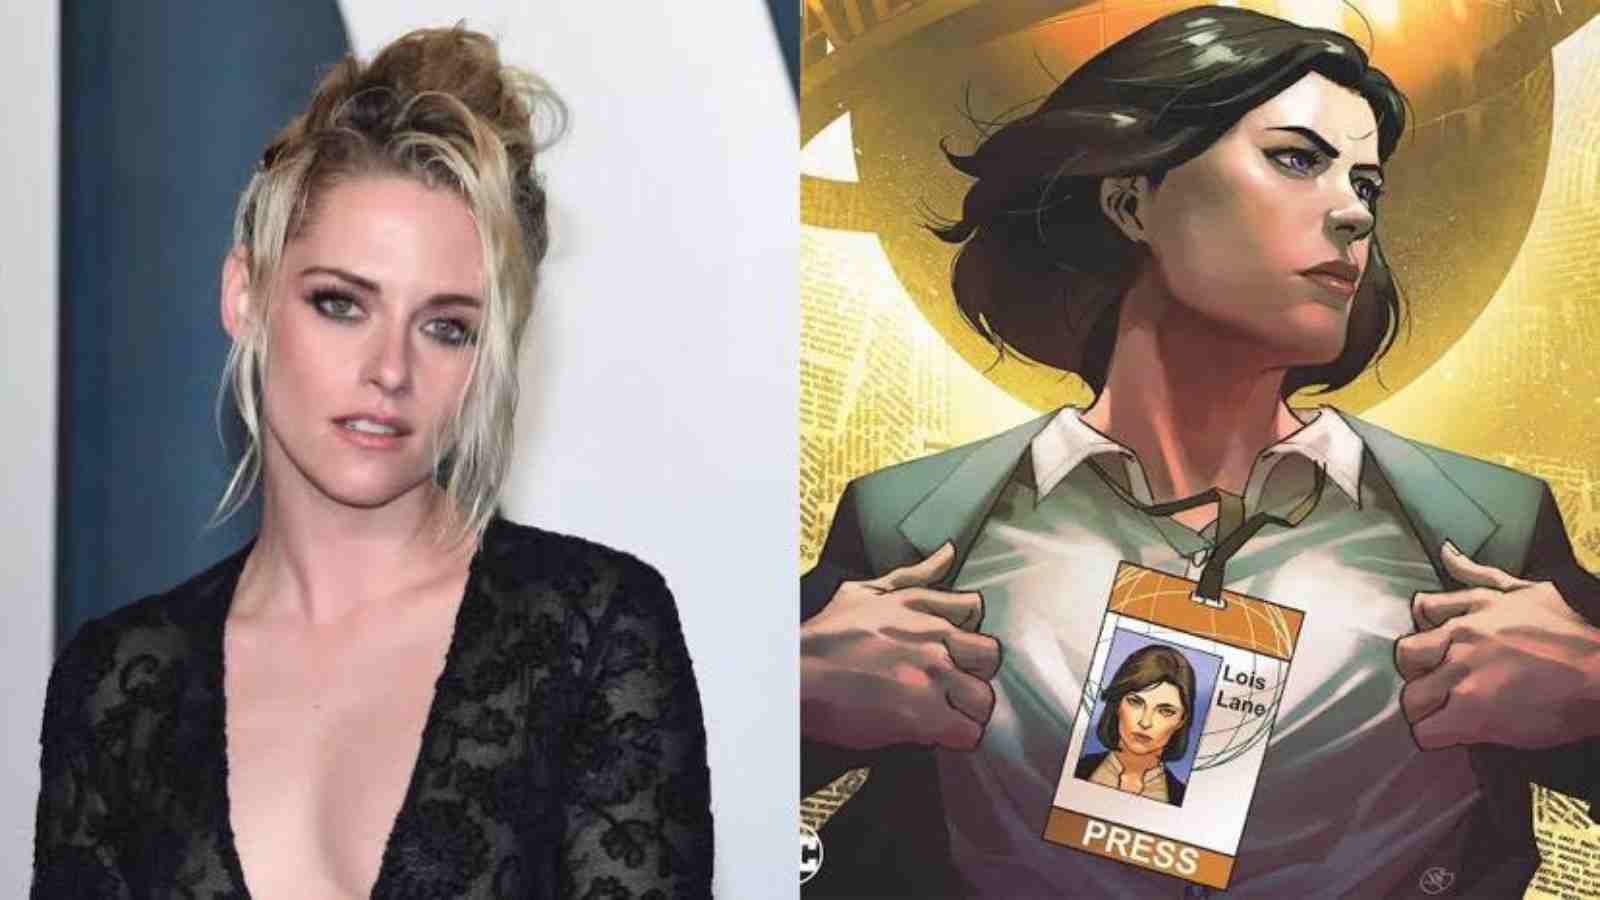 What DC role did Kristen Stewart reject?